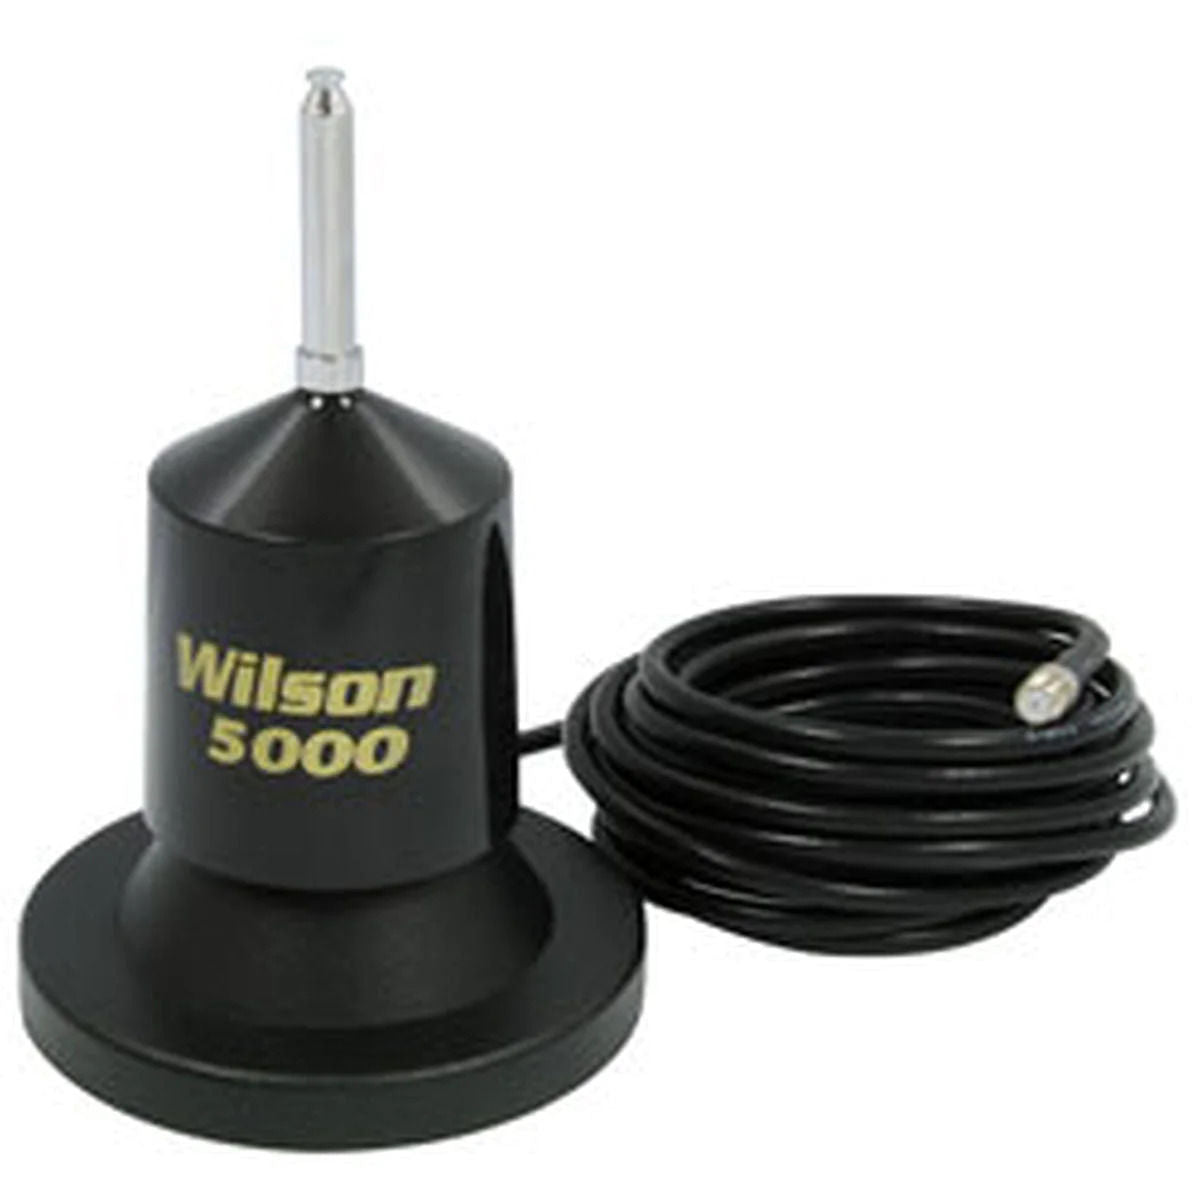 Wilson 880-200152B - 5000 W CB Radio Magnet Mount Antenna